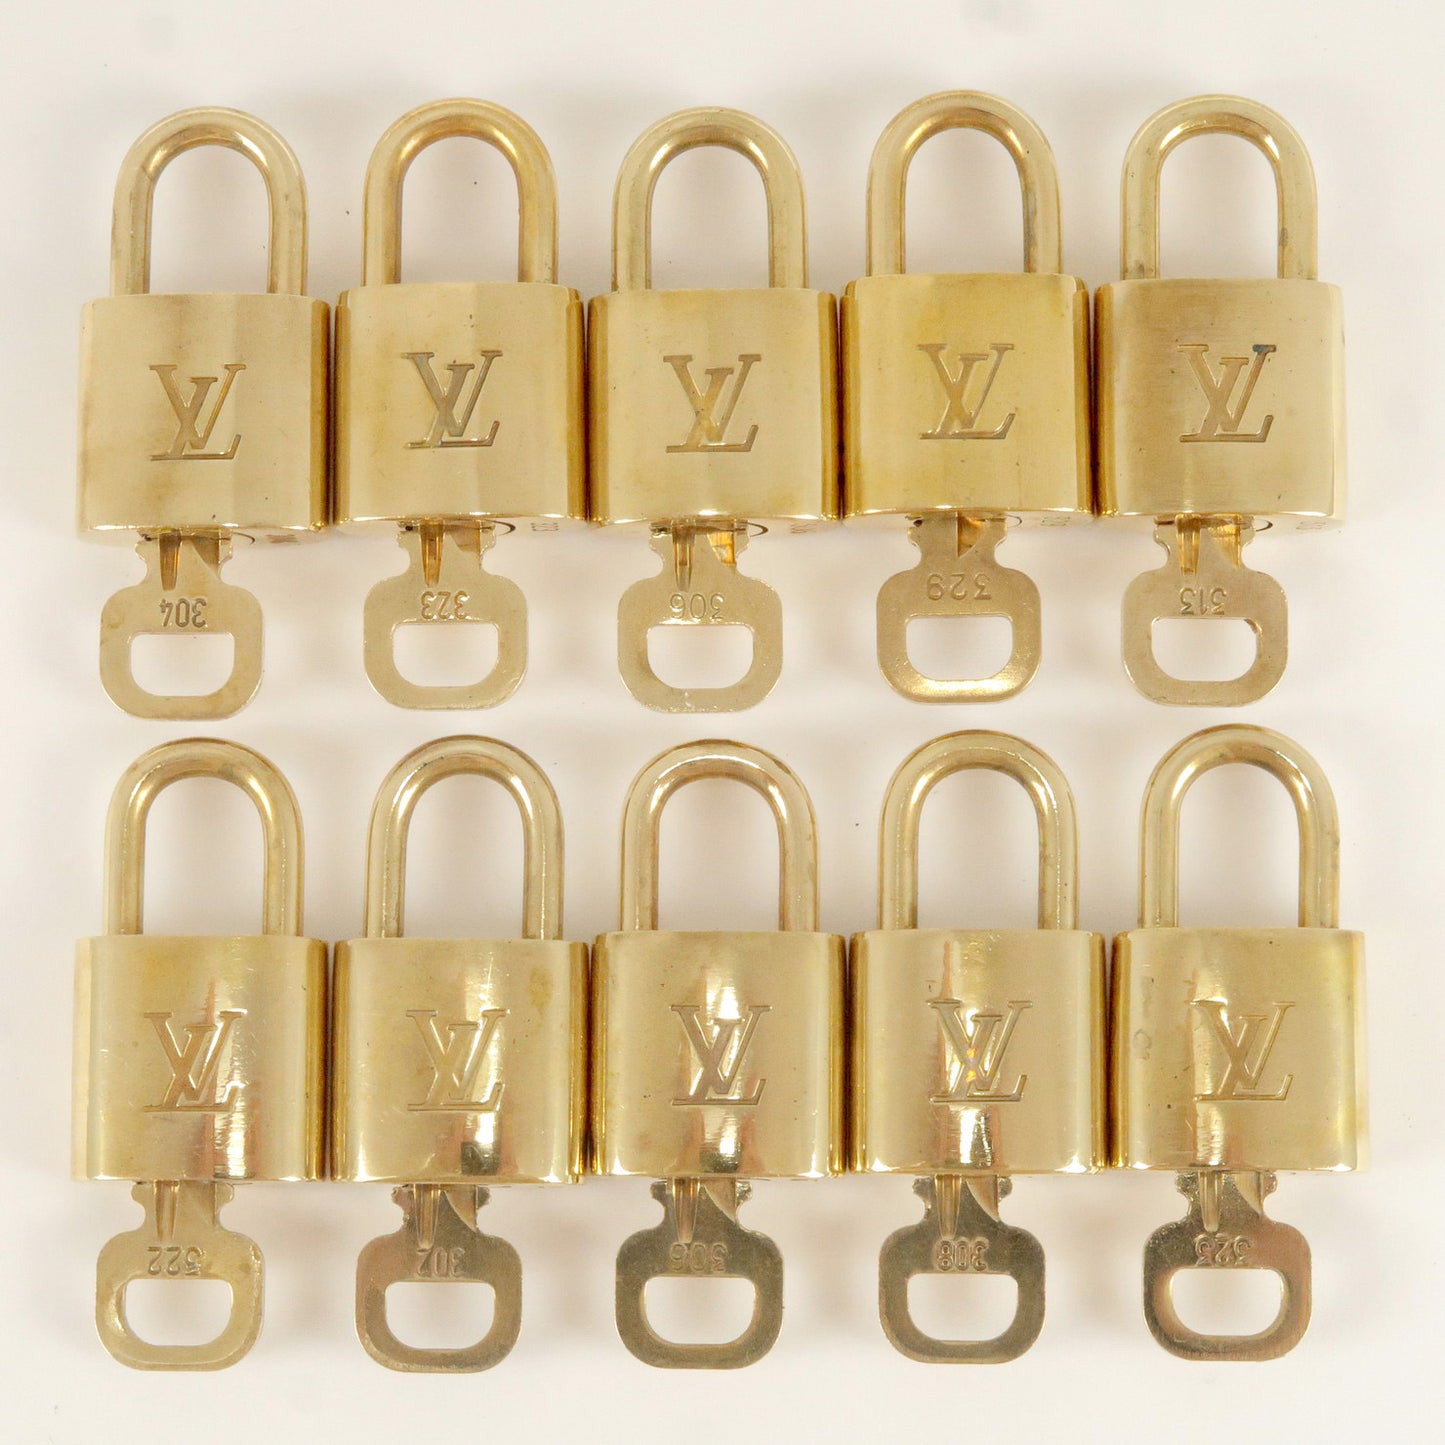 Louis Vuitton Set of 10 Lock & Key Cadena Key Lock